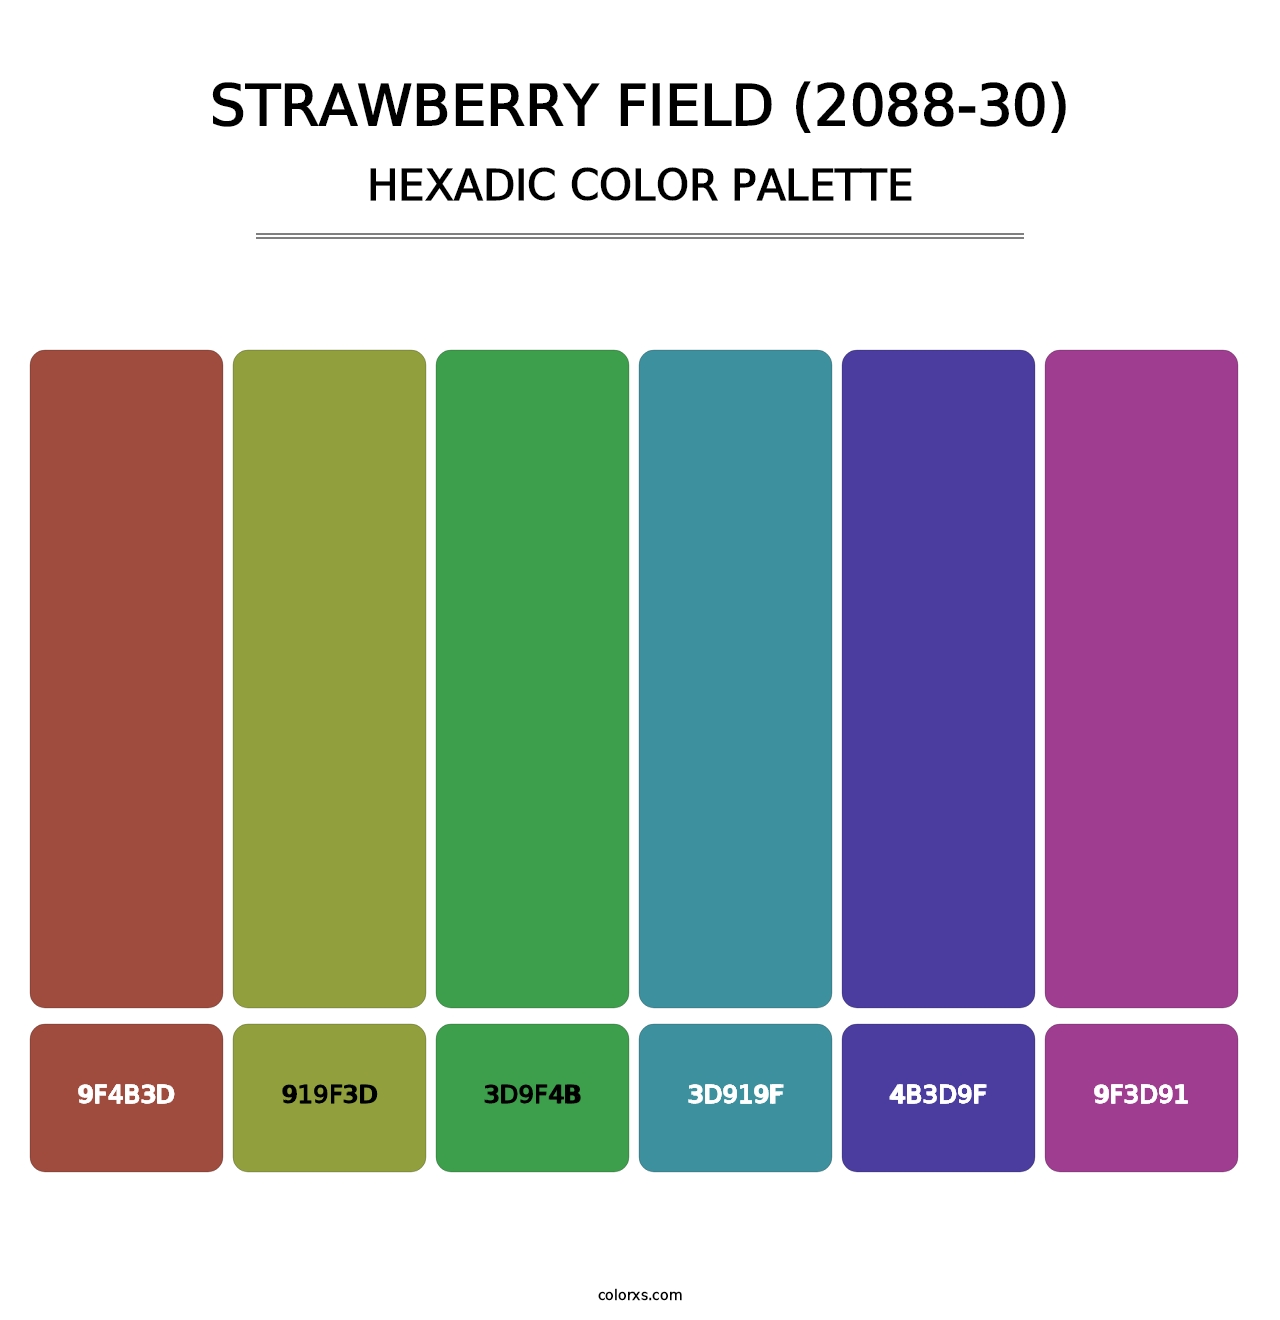 Strawberry Field (2088-30) - Hexadic Color Palette